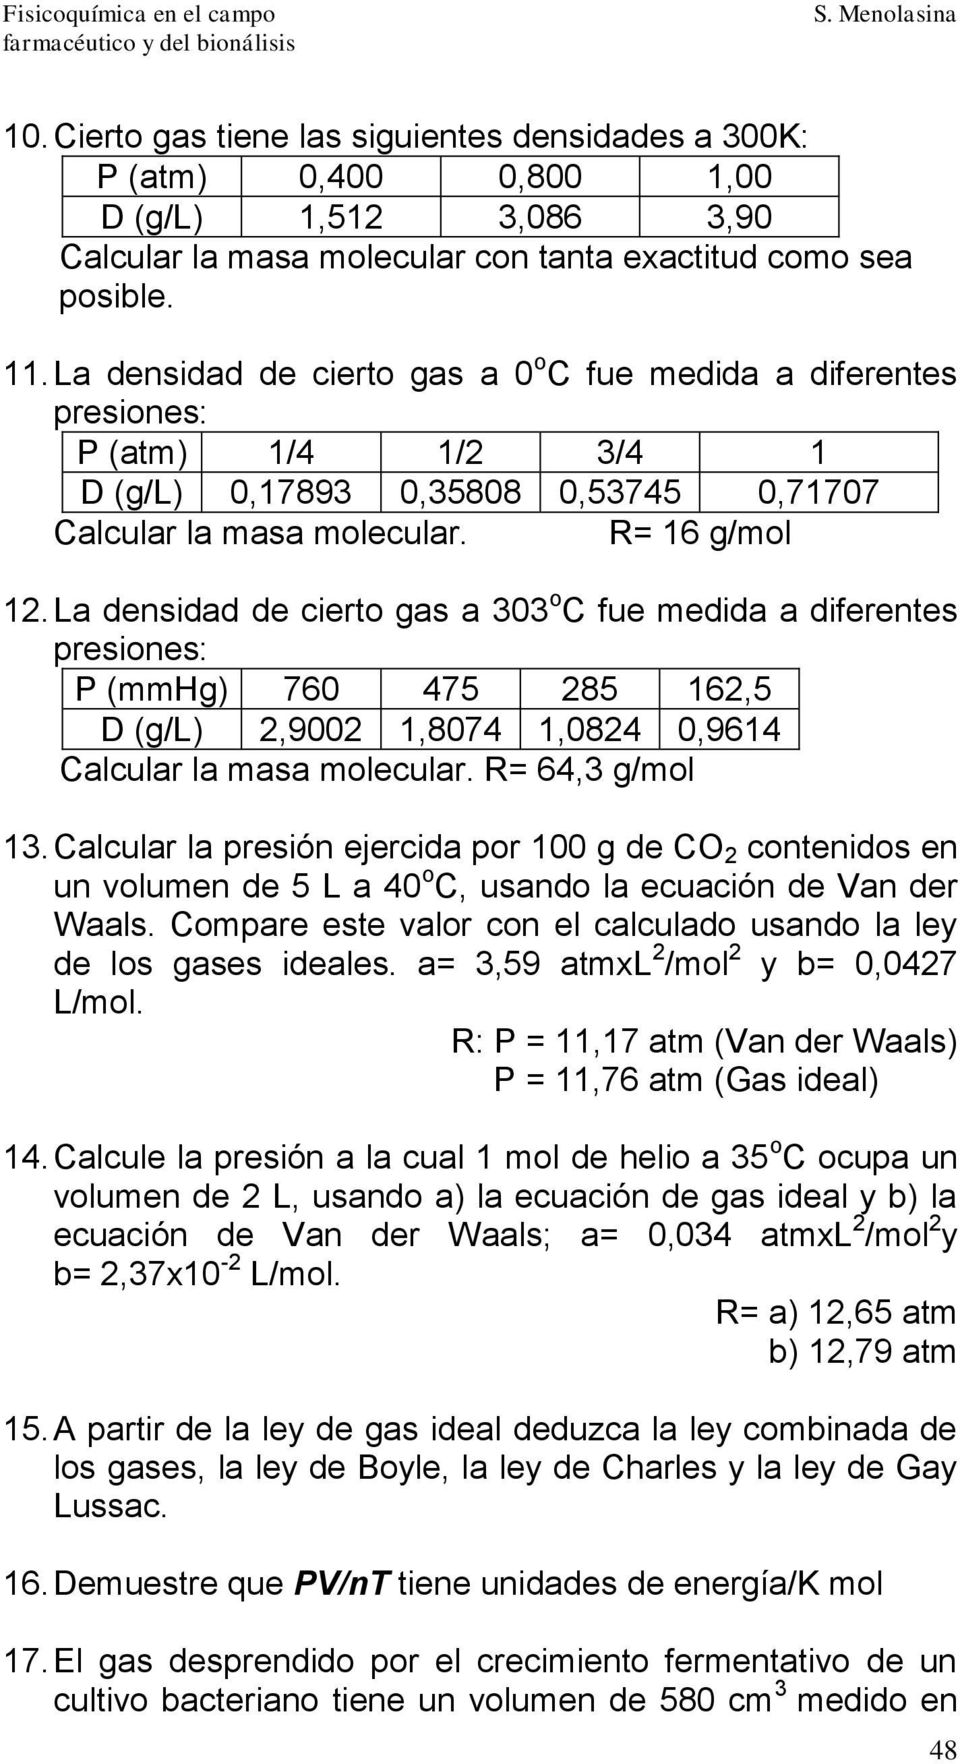 La desidad de cierto gas a 303 o C fue medida a diferetes presioes: (mmhg) 760 475 85 16,5 D (g/l),900 1,8074 1,084 0,9614 Calcular la masa molecular. R= 64,3 g/mol 13.